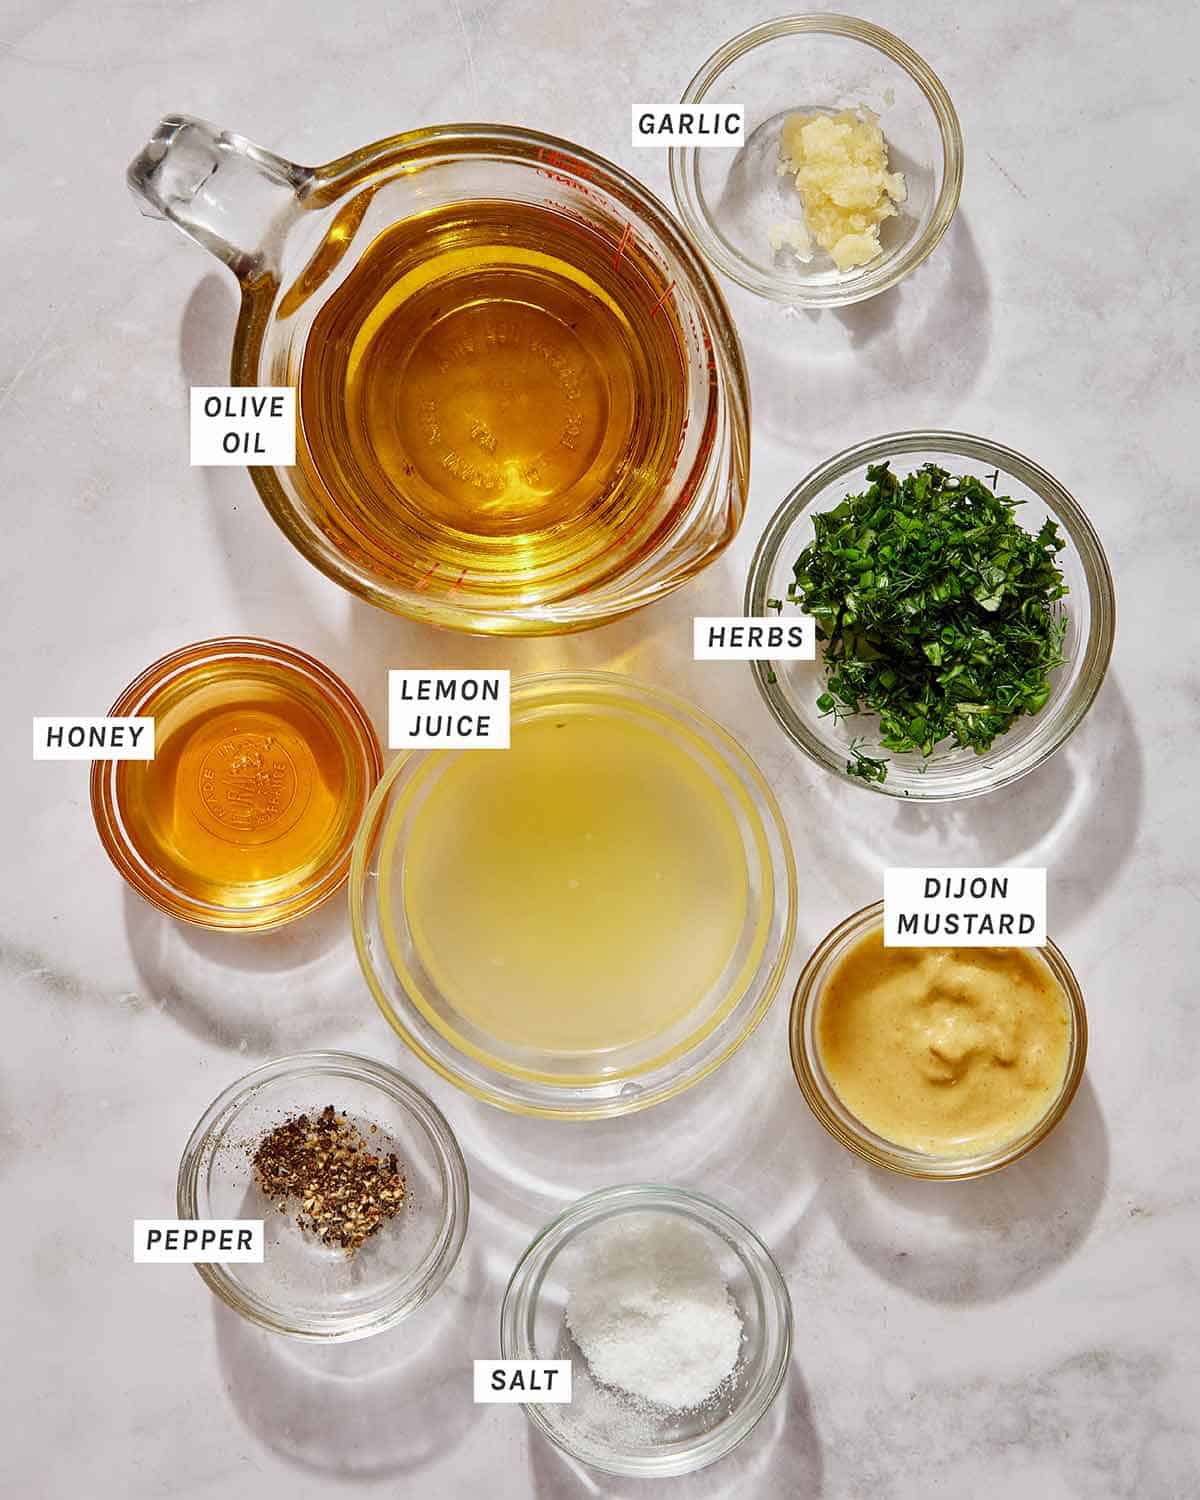 Ingredients for an herb vinaigrette salad dressing. 